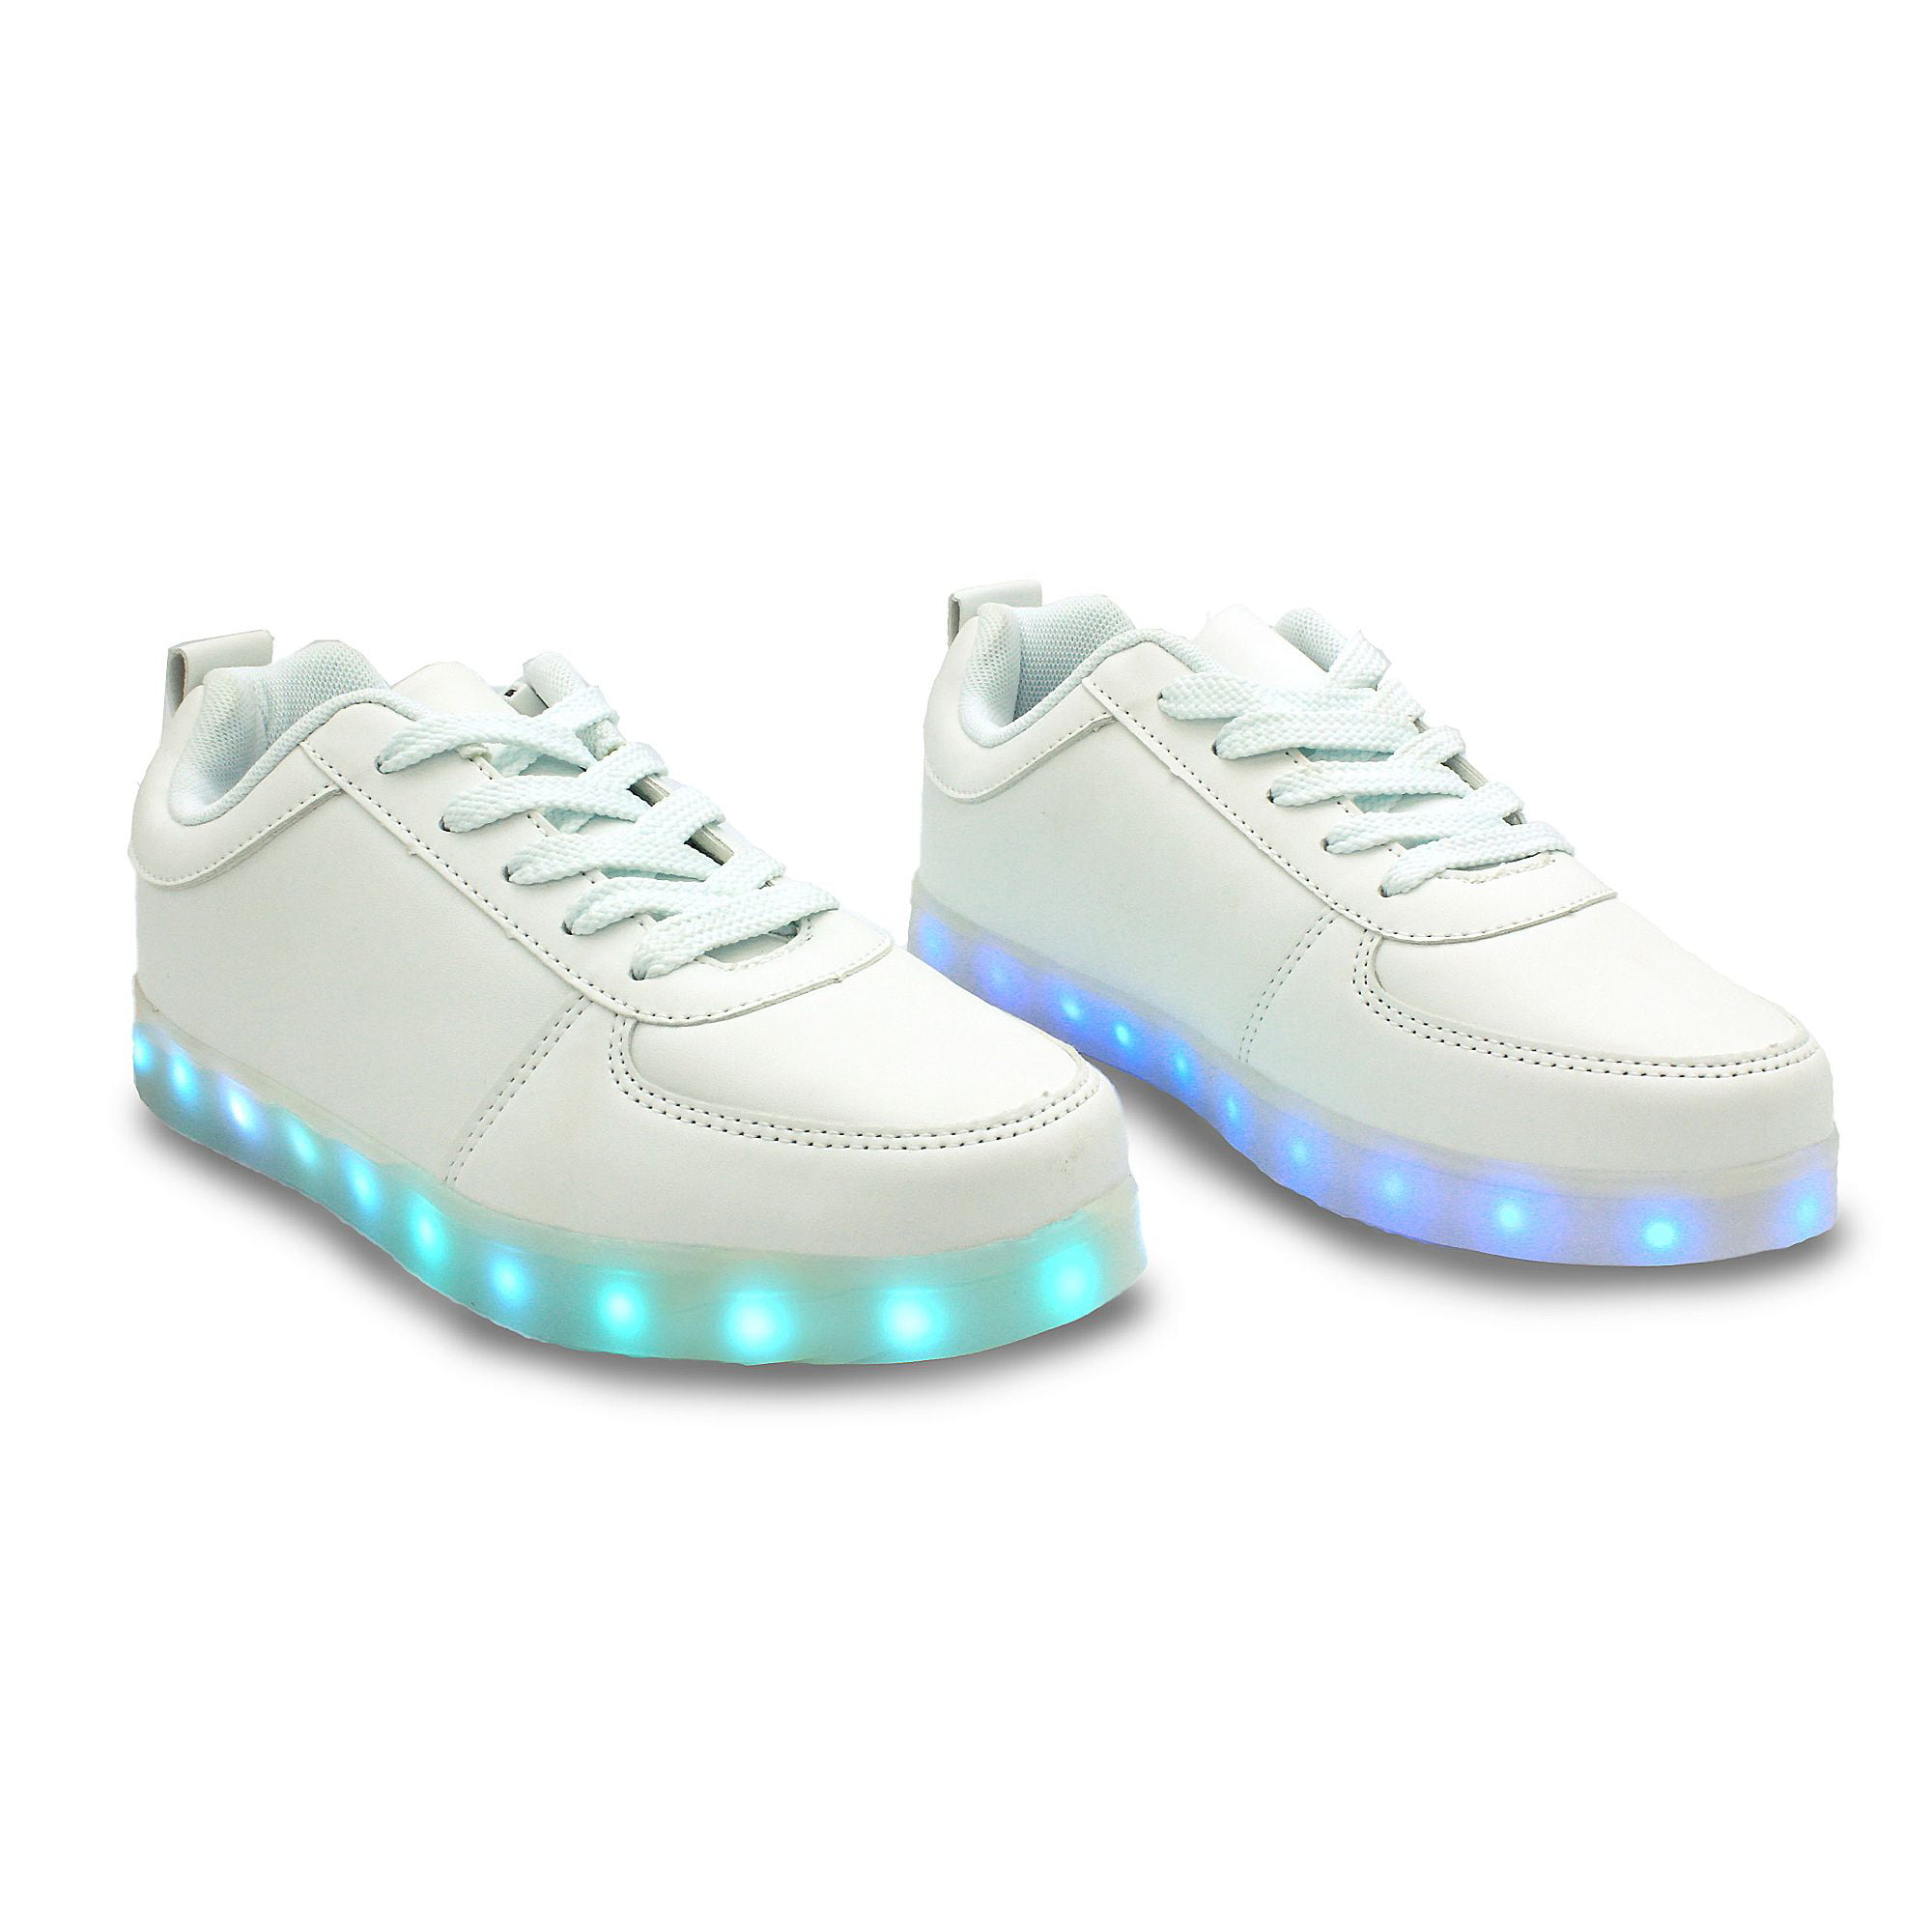 Actuator sla Beschrijven Family Smiles LED Light Up Sneakers Kids Low Top Boys Girls Unisex Lace Up  Shoes White Little Kid US 11 / EU 28 - Walmart.com